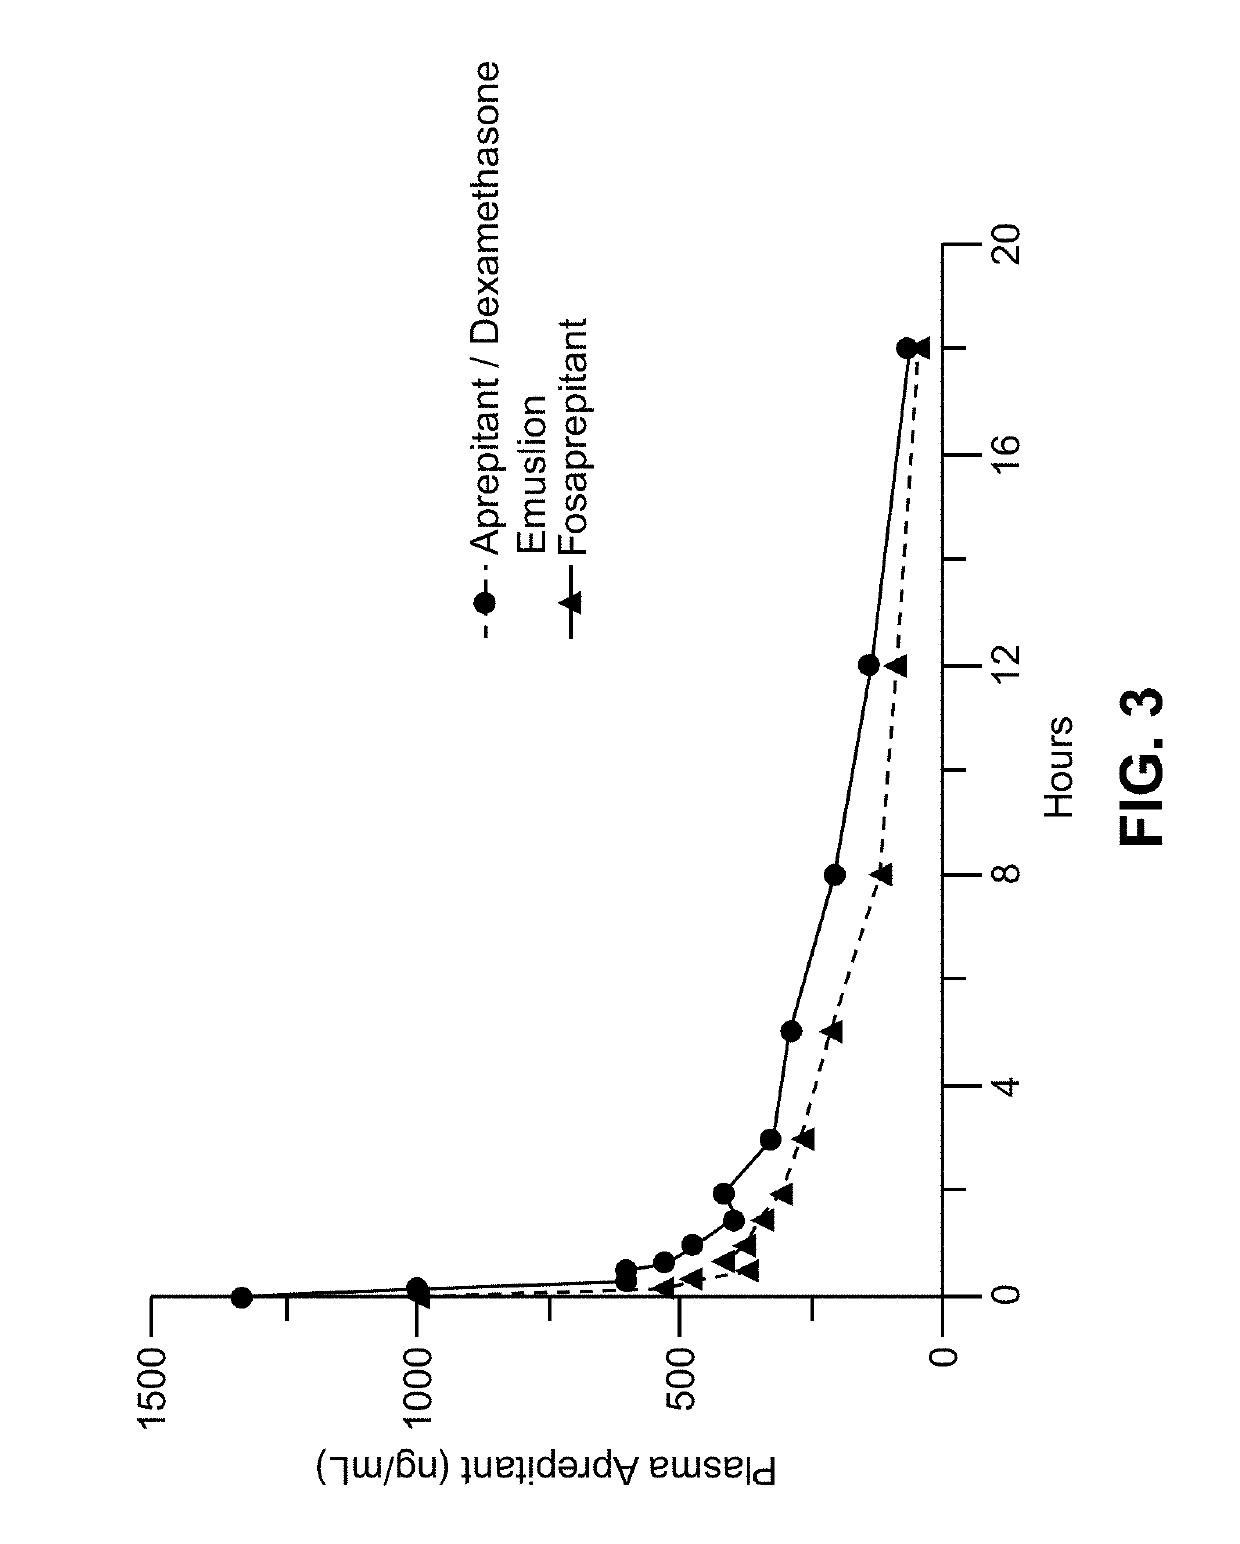 Method of administering emulsion formulations of an nk-1 receptor antagonist